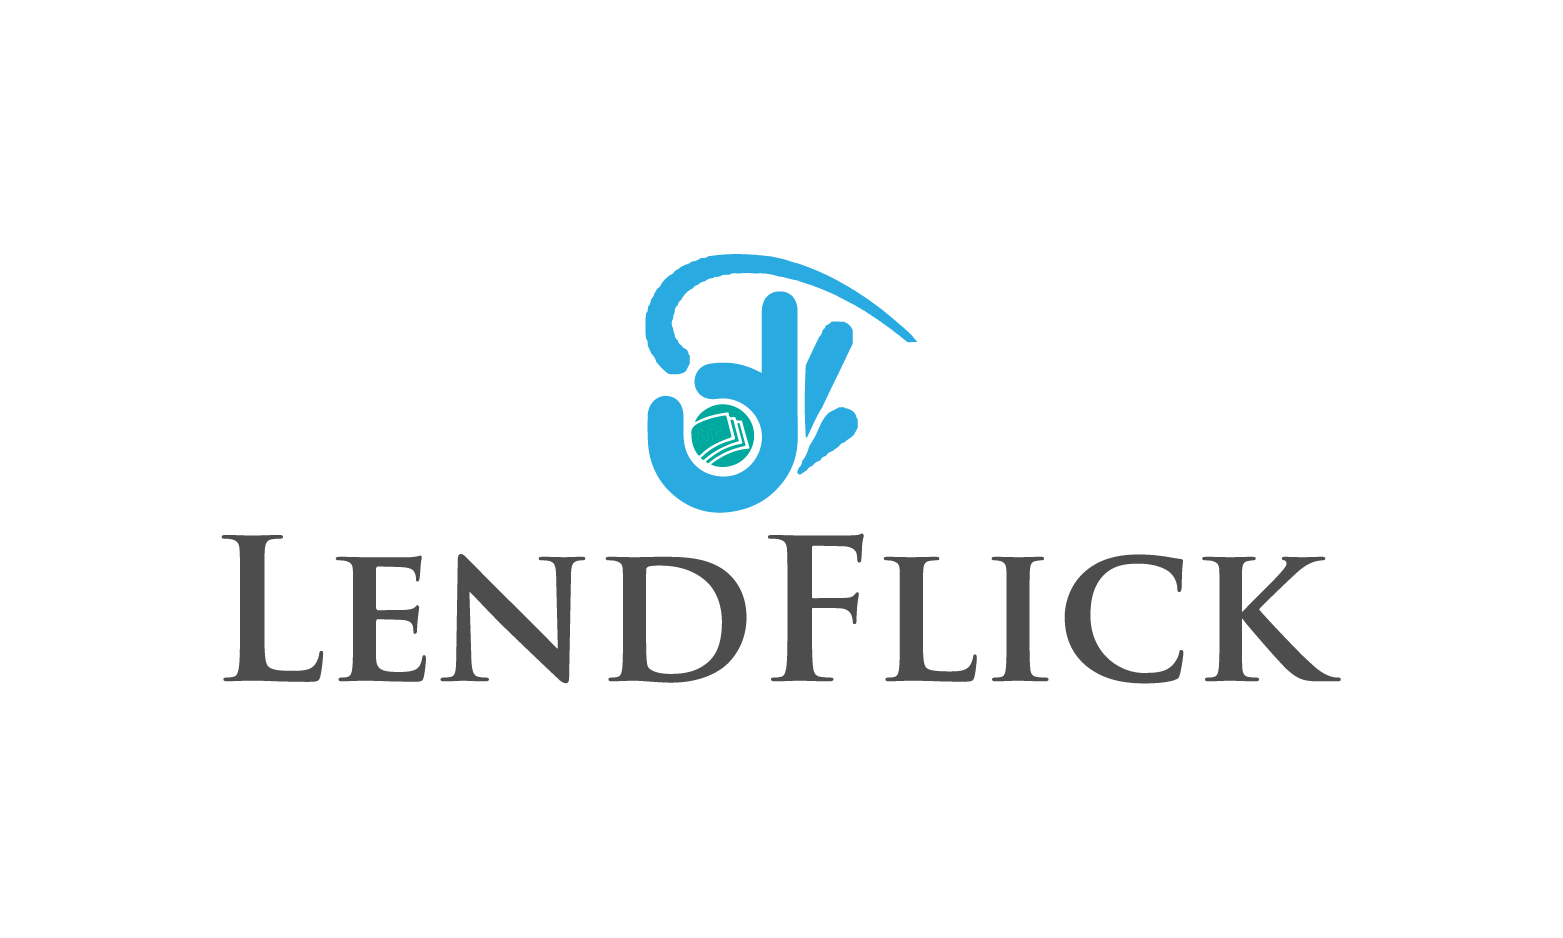 LendFlick.com - Creative brandable domain for sale